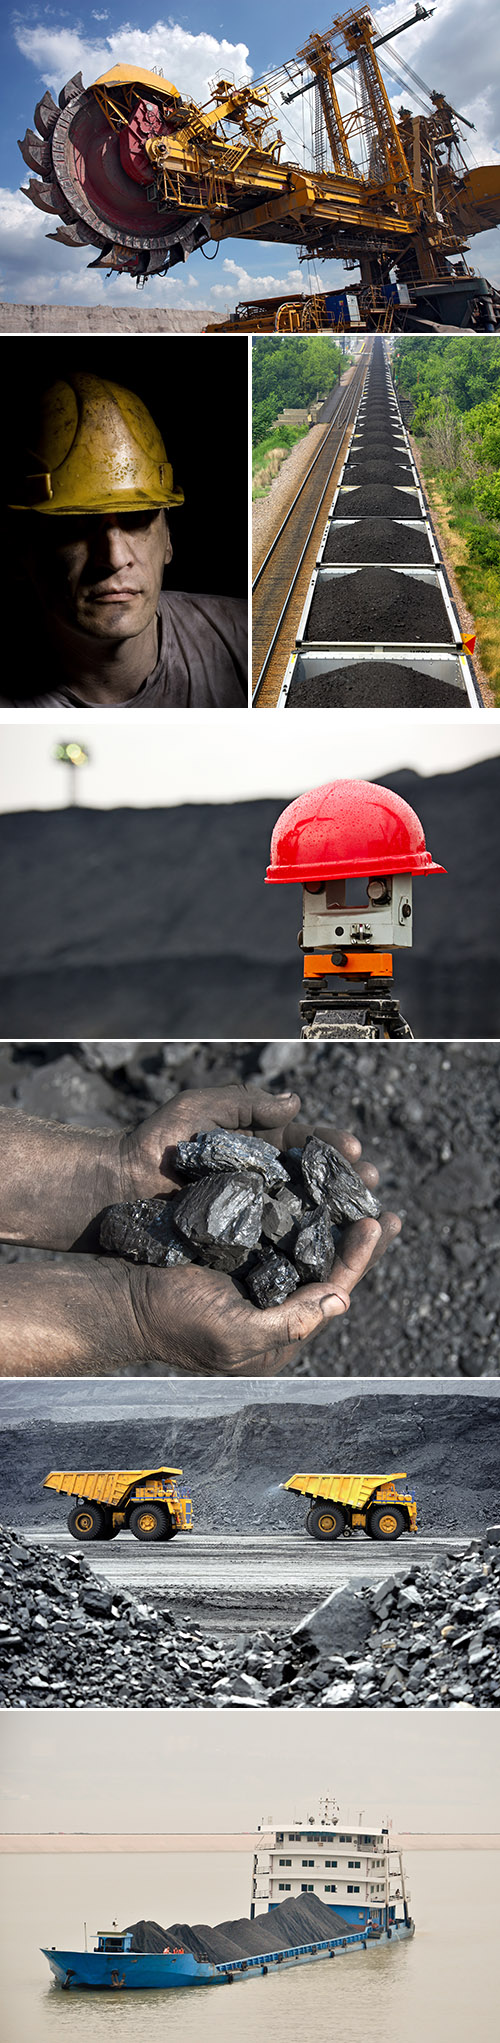 Stock Photos - Coal Industry